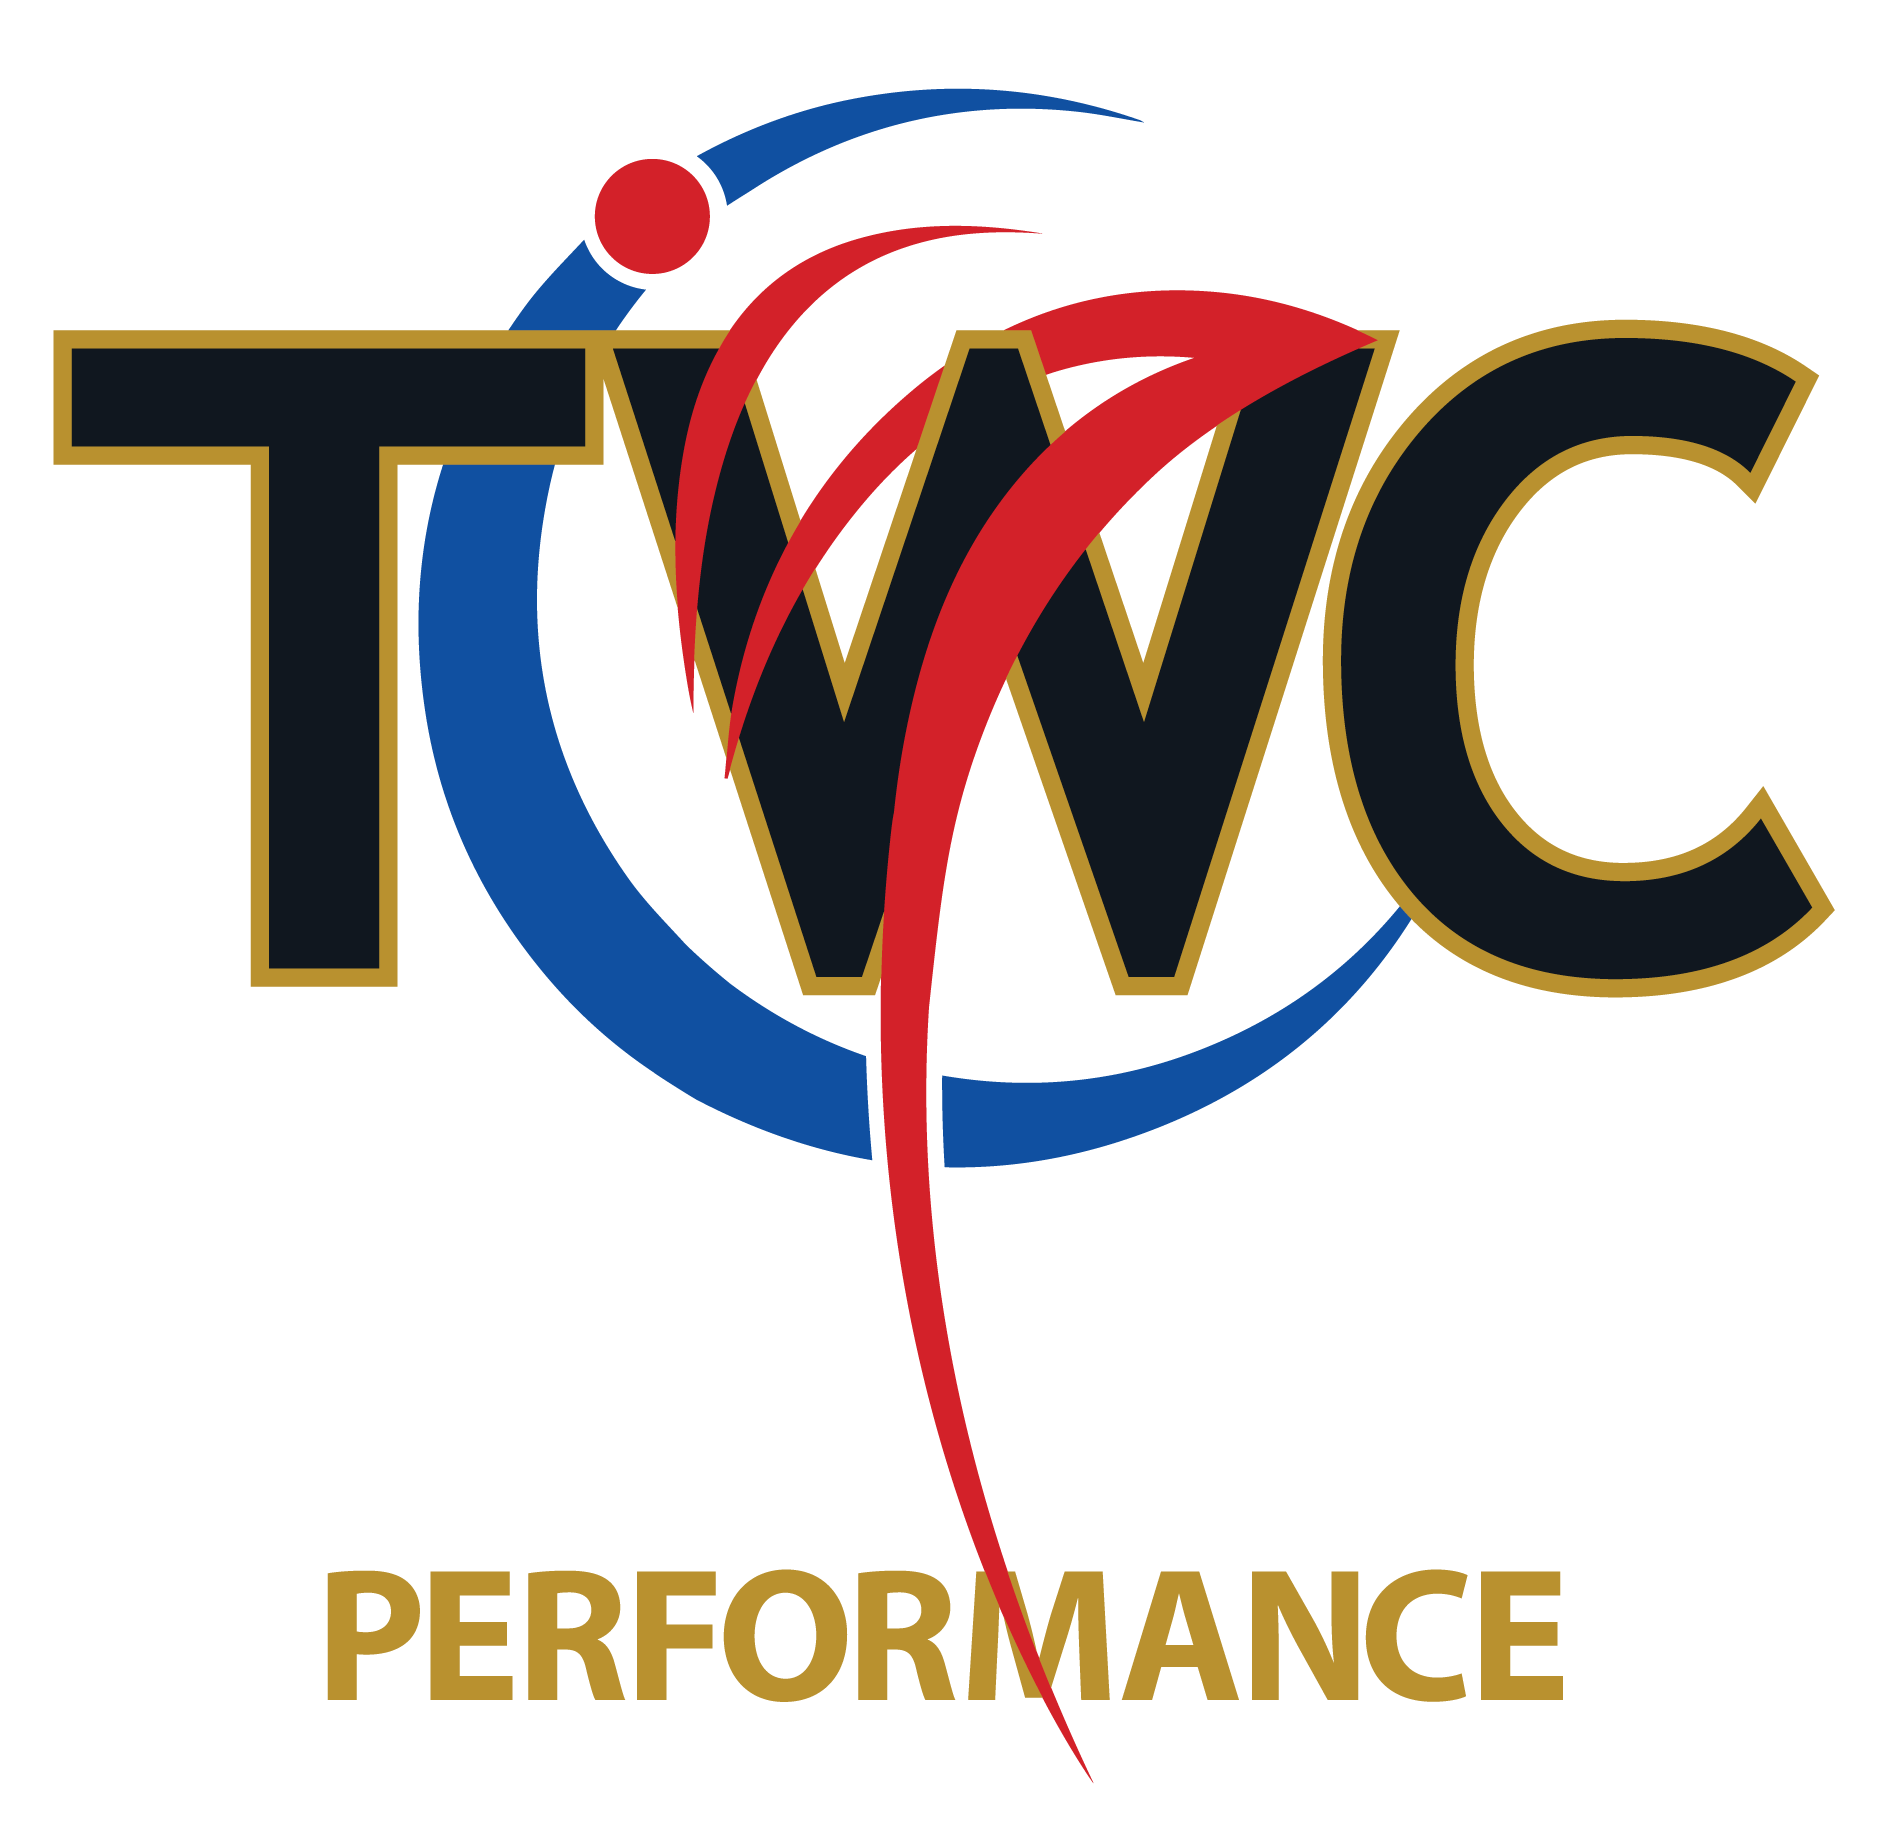 TWC Logo - TWC Logo Redesign on Behance